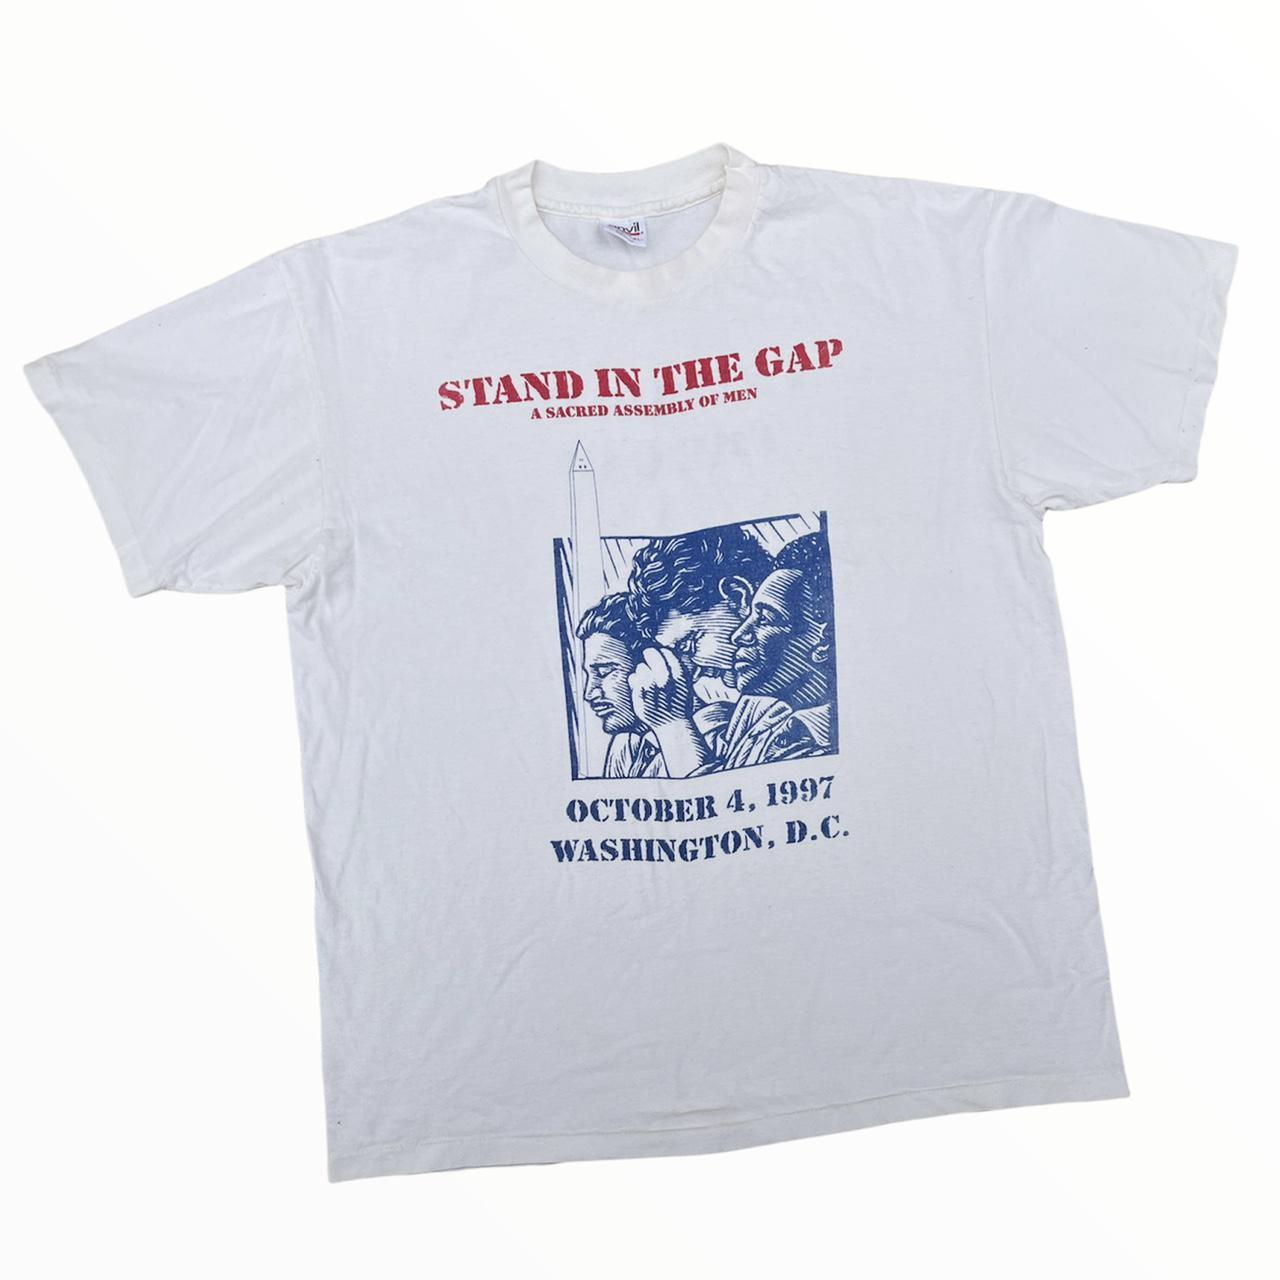 Product Image 1 - Vintage T-Shirt

•Unisex Vintage 1997 Stand